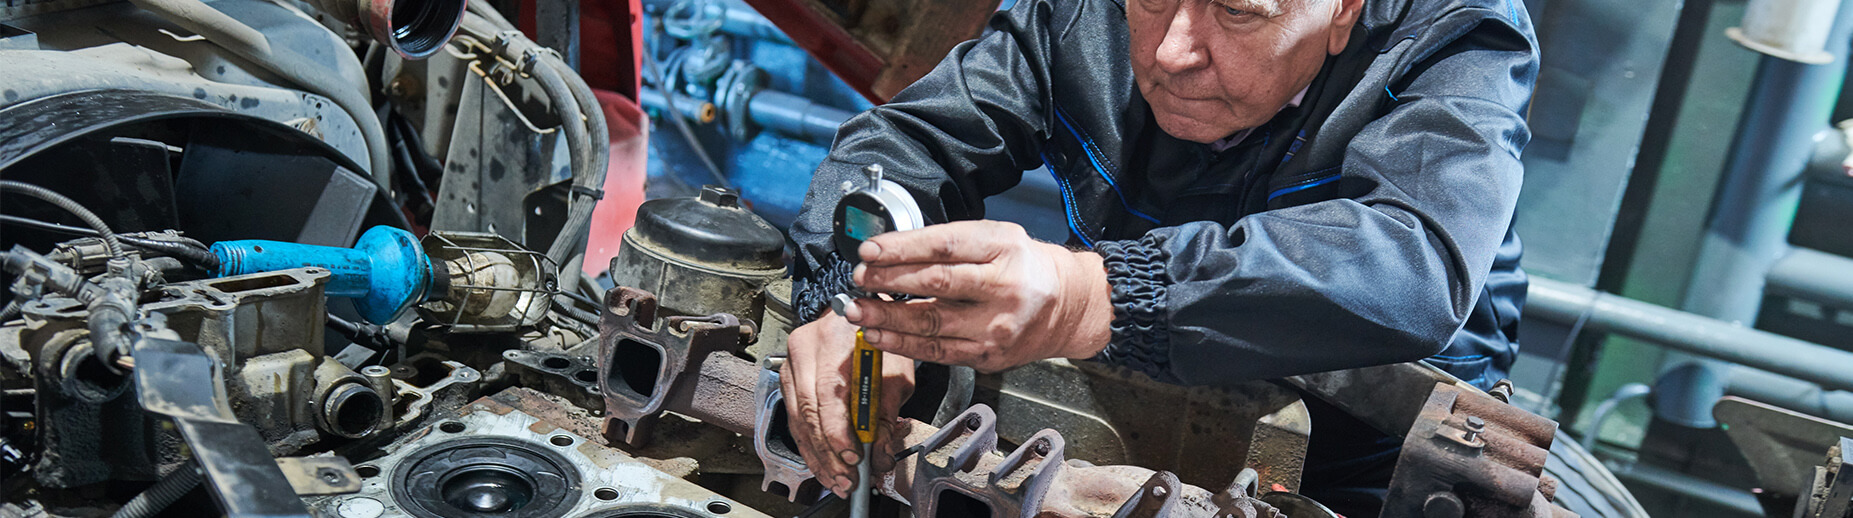 Suffolk Auto Mechanic, Auto Repair and Diesel Mechanic